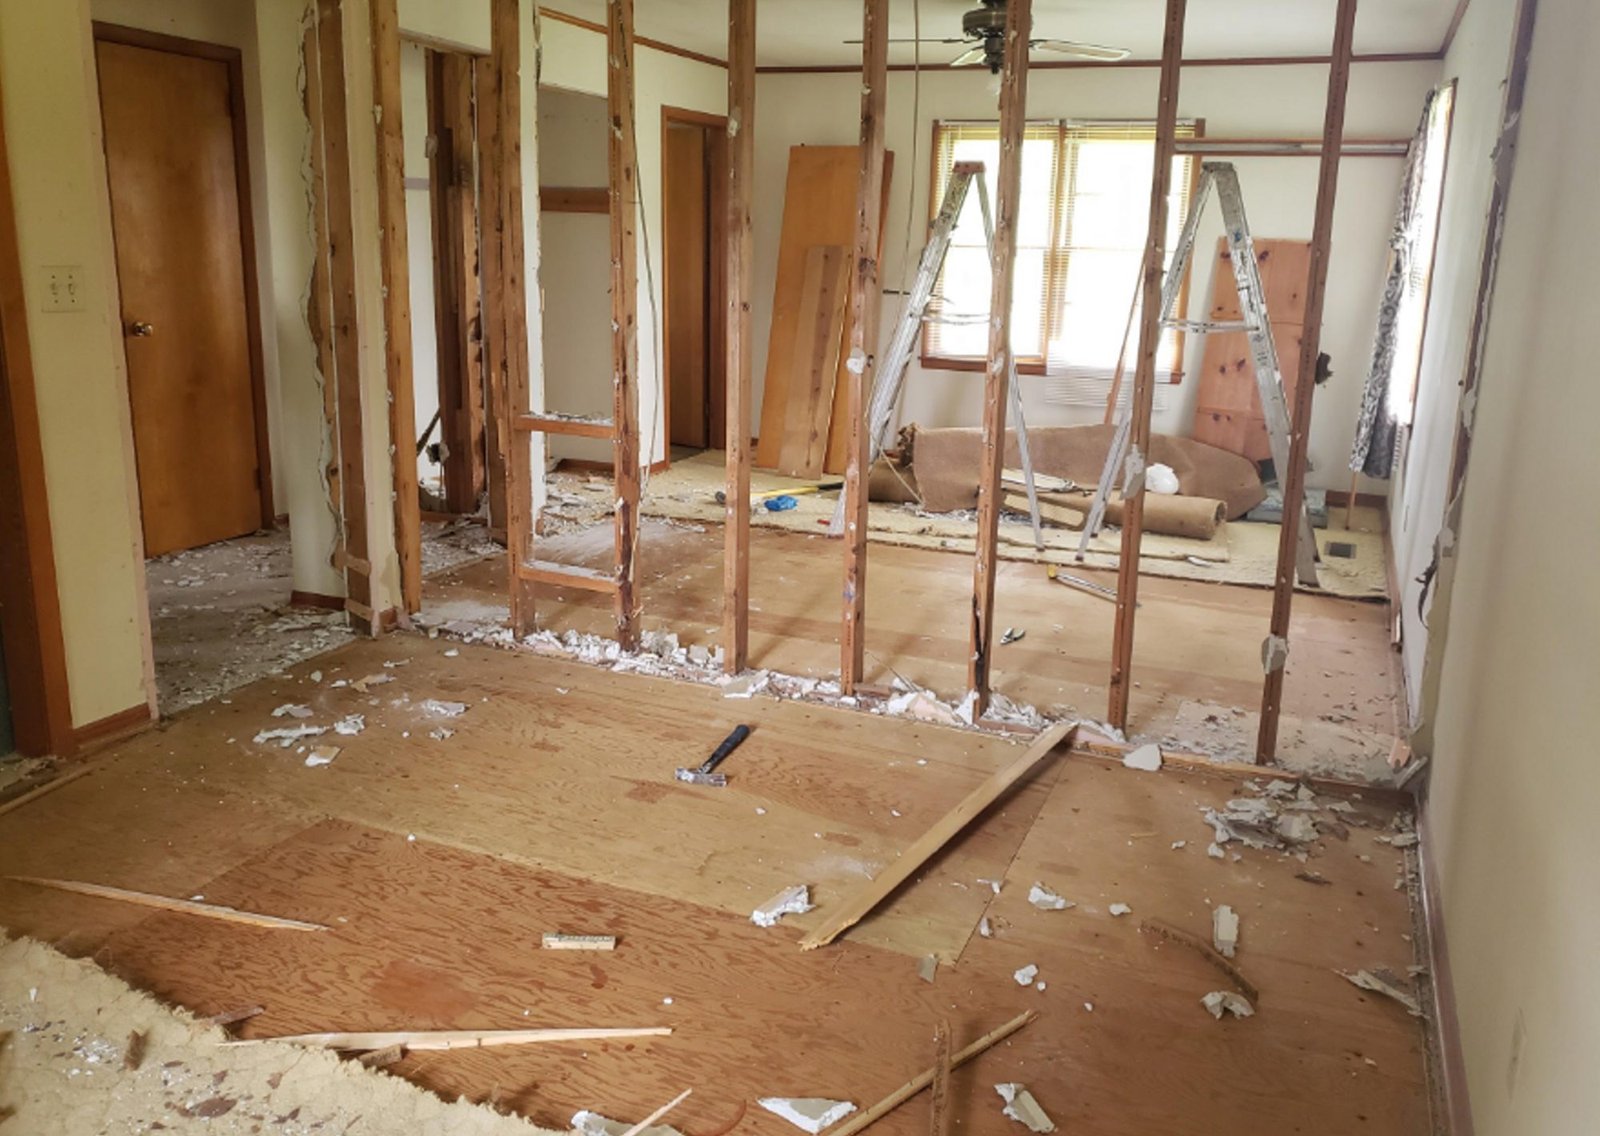 House Framing or Rough Carpentry